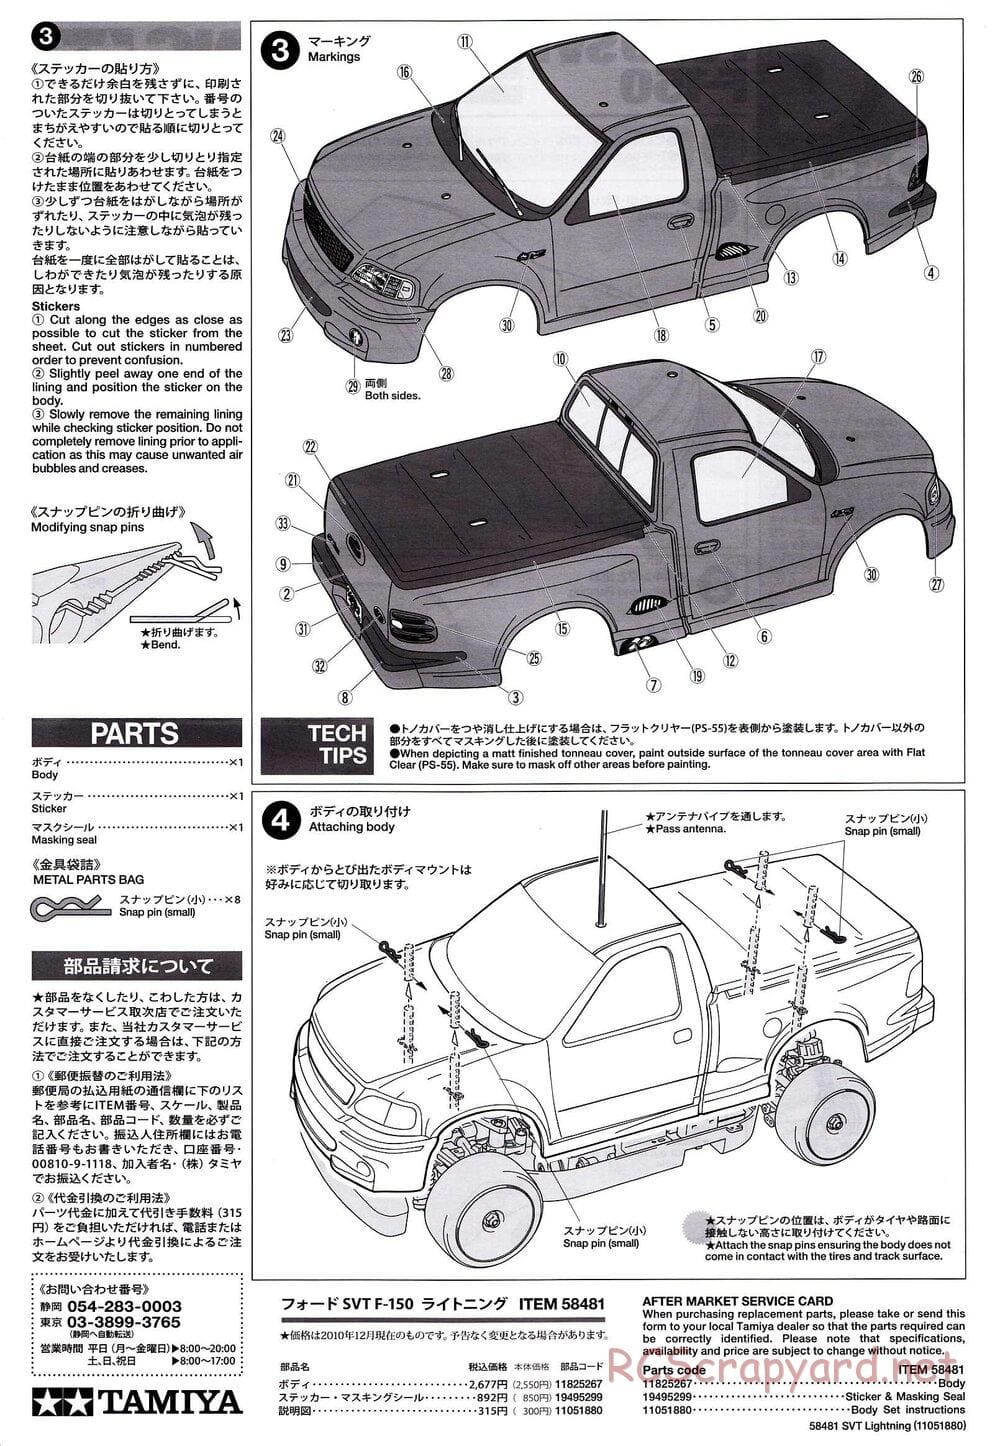 Tamiya - Ford SVT F-150 Lghtning - TT-01E Chassis - Body Manual - Page 2